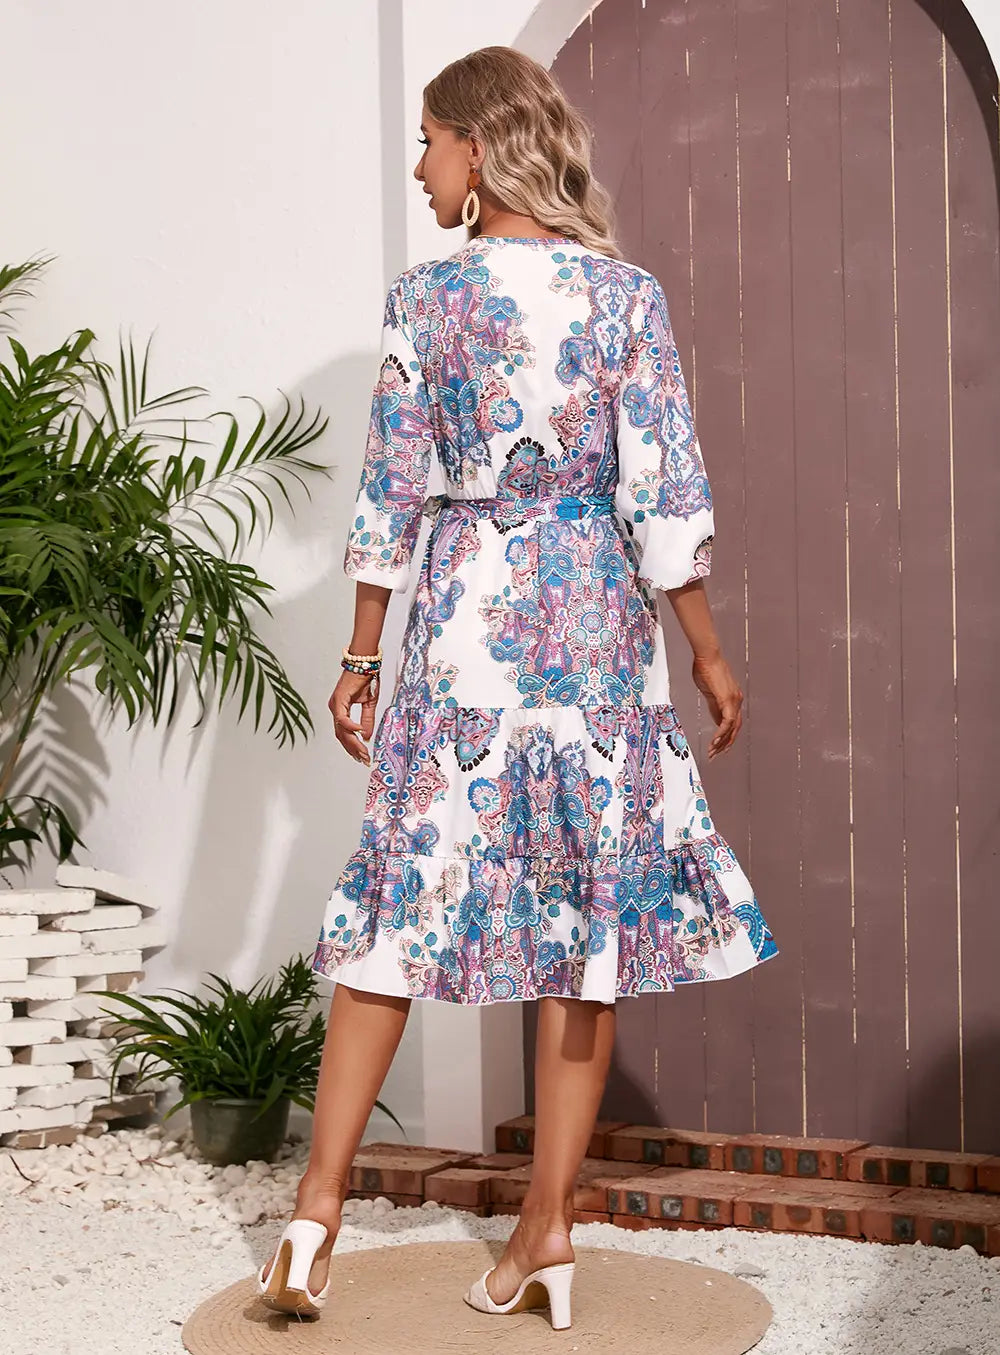 Paisley A-line Dress - Elegant V-neck With 3/4 Sleeves